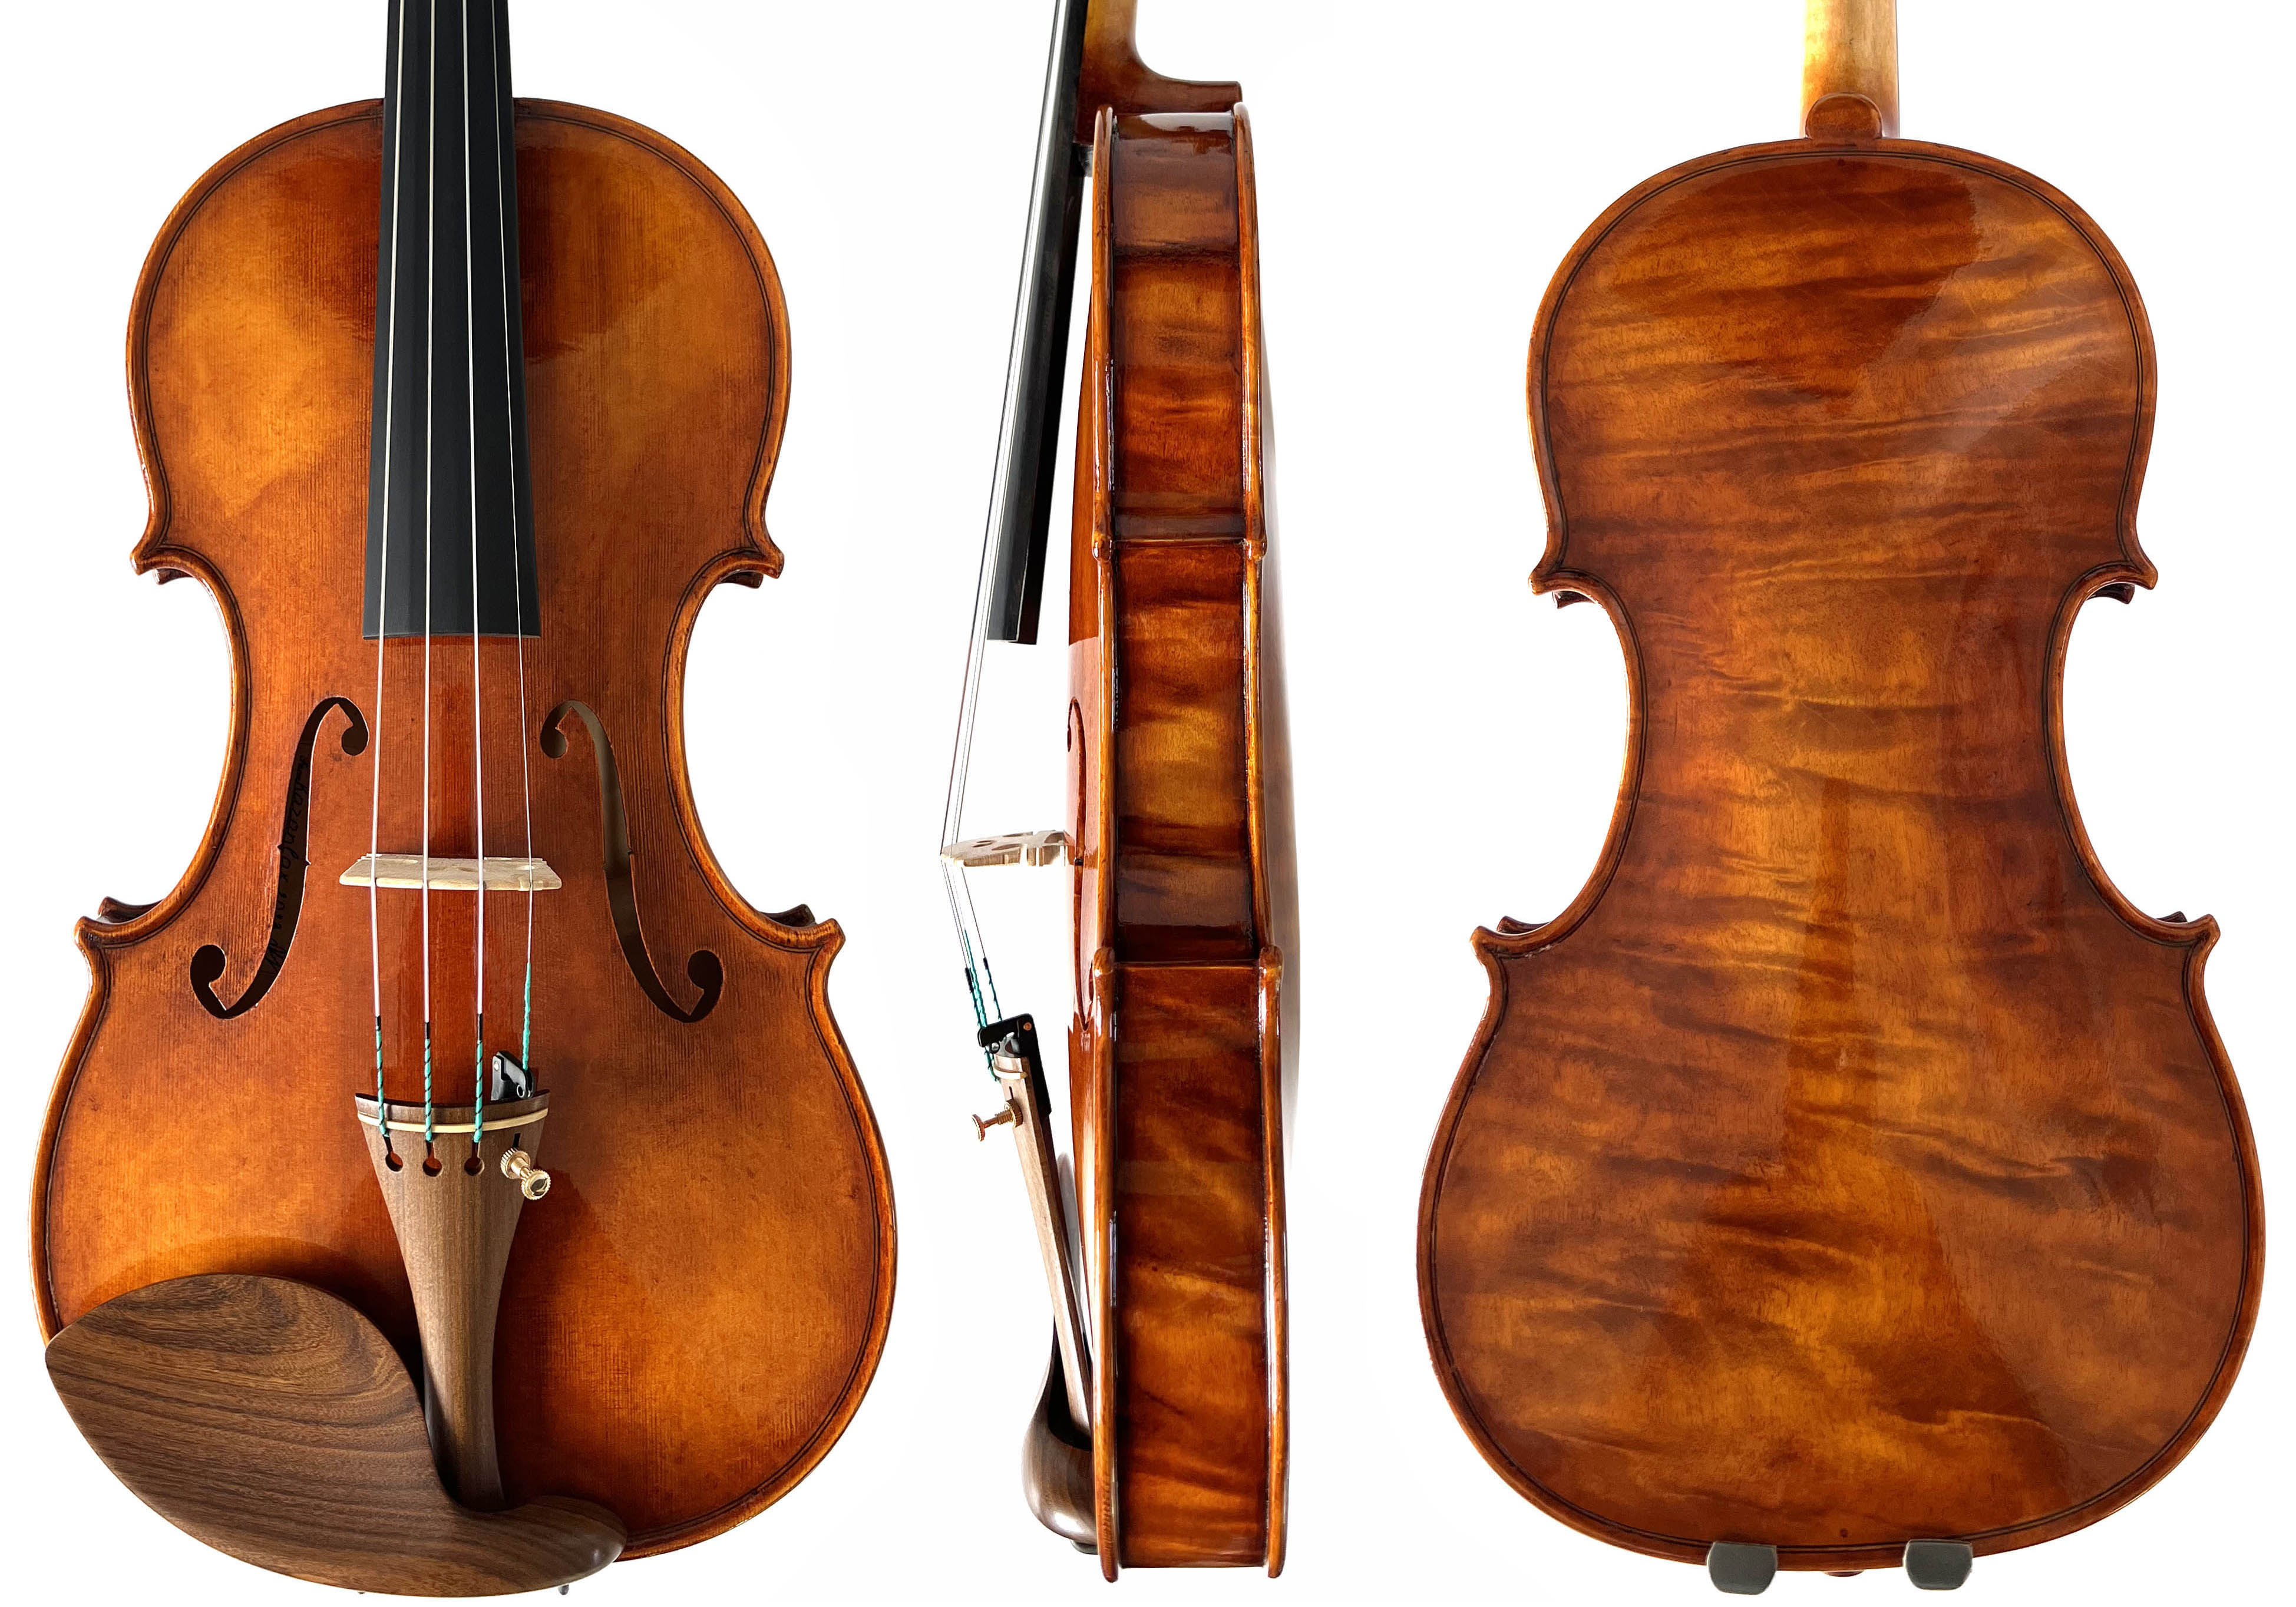 IMT-202-Electronic Metronome & Digital Tuner -  Fiddleheads  Violin Studio